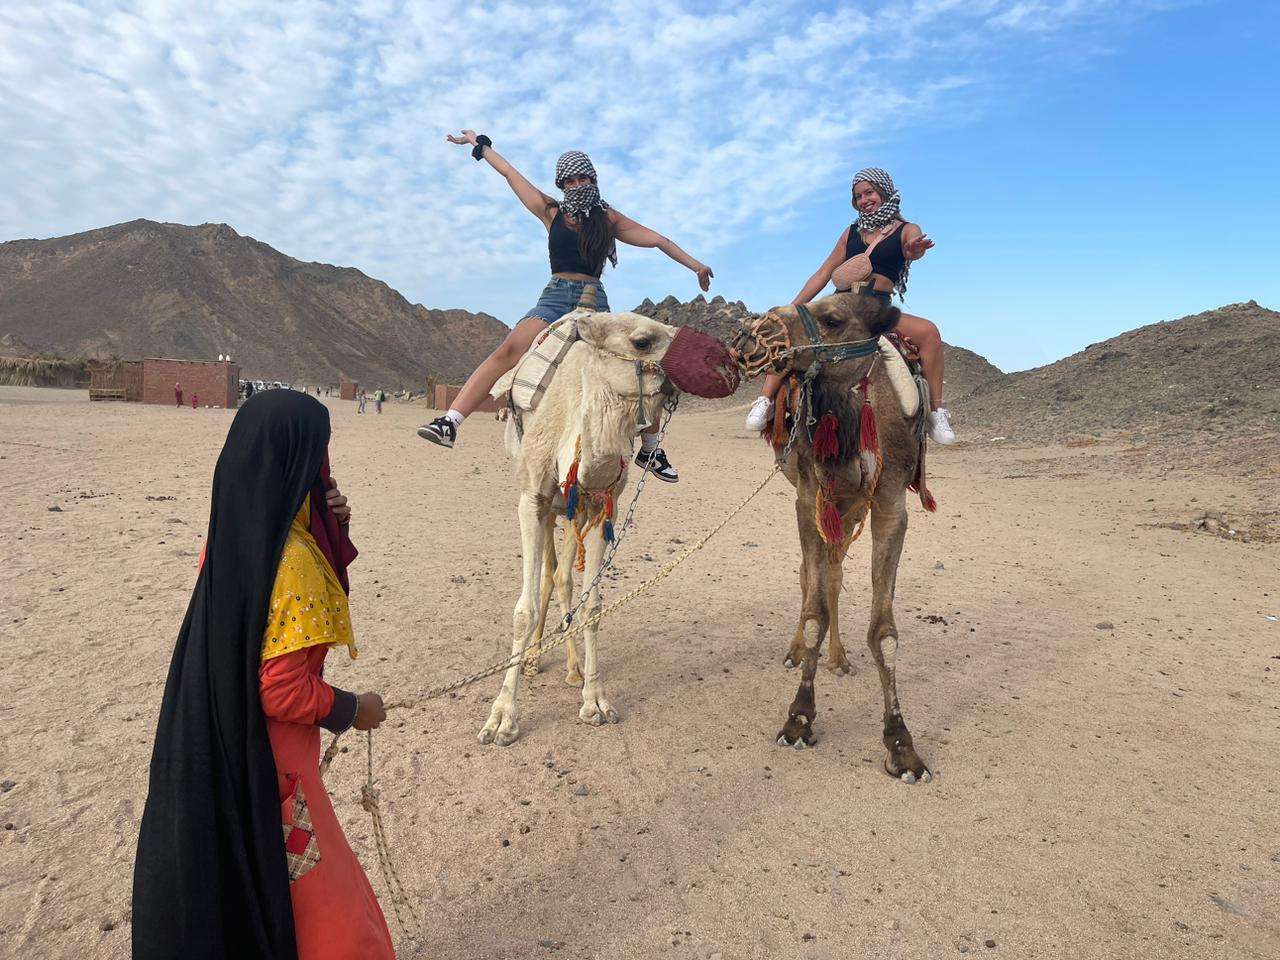 Desert Quad Safari, Camels, and Bedouin Town